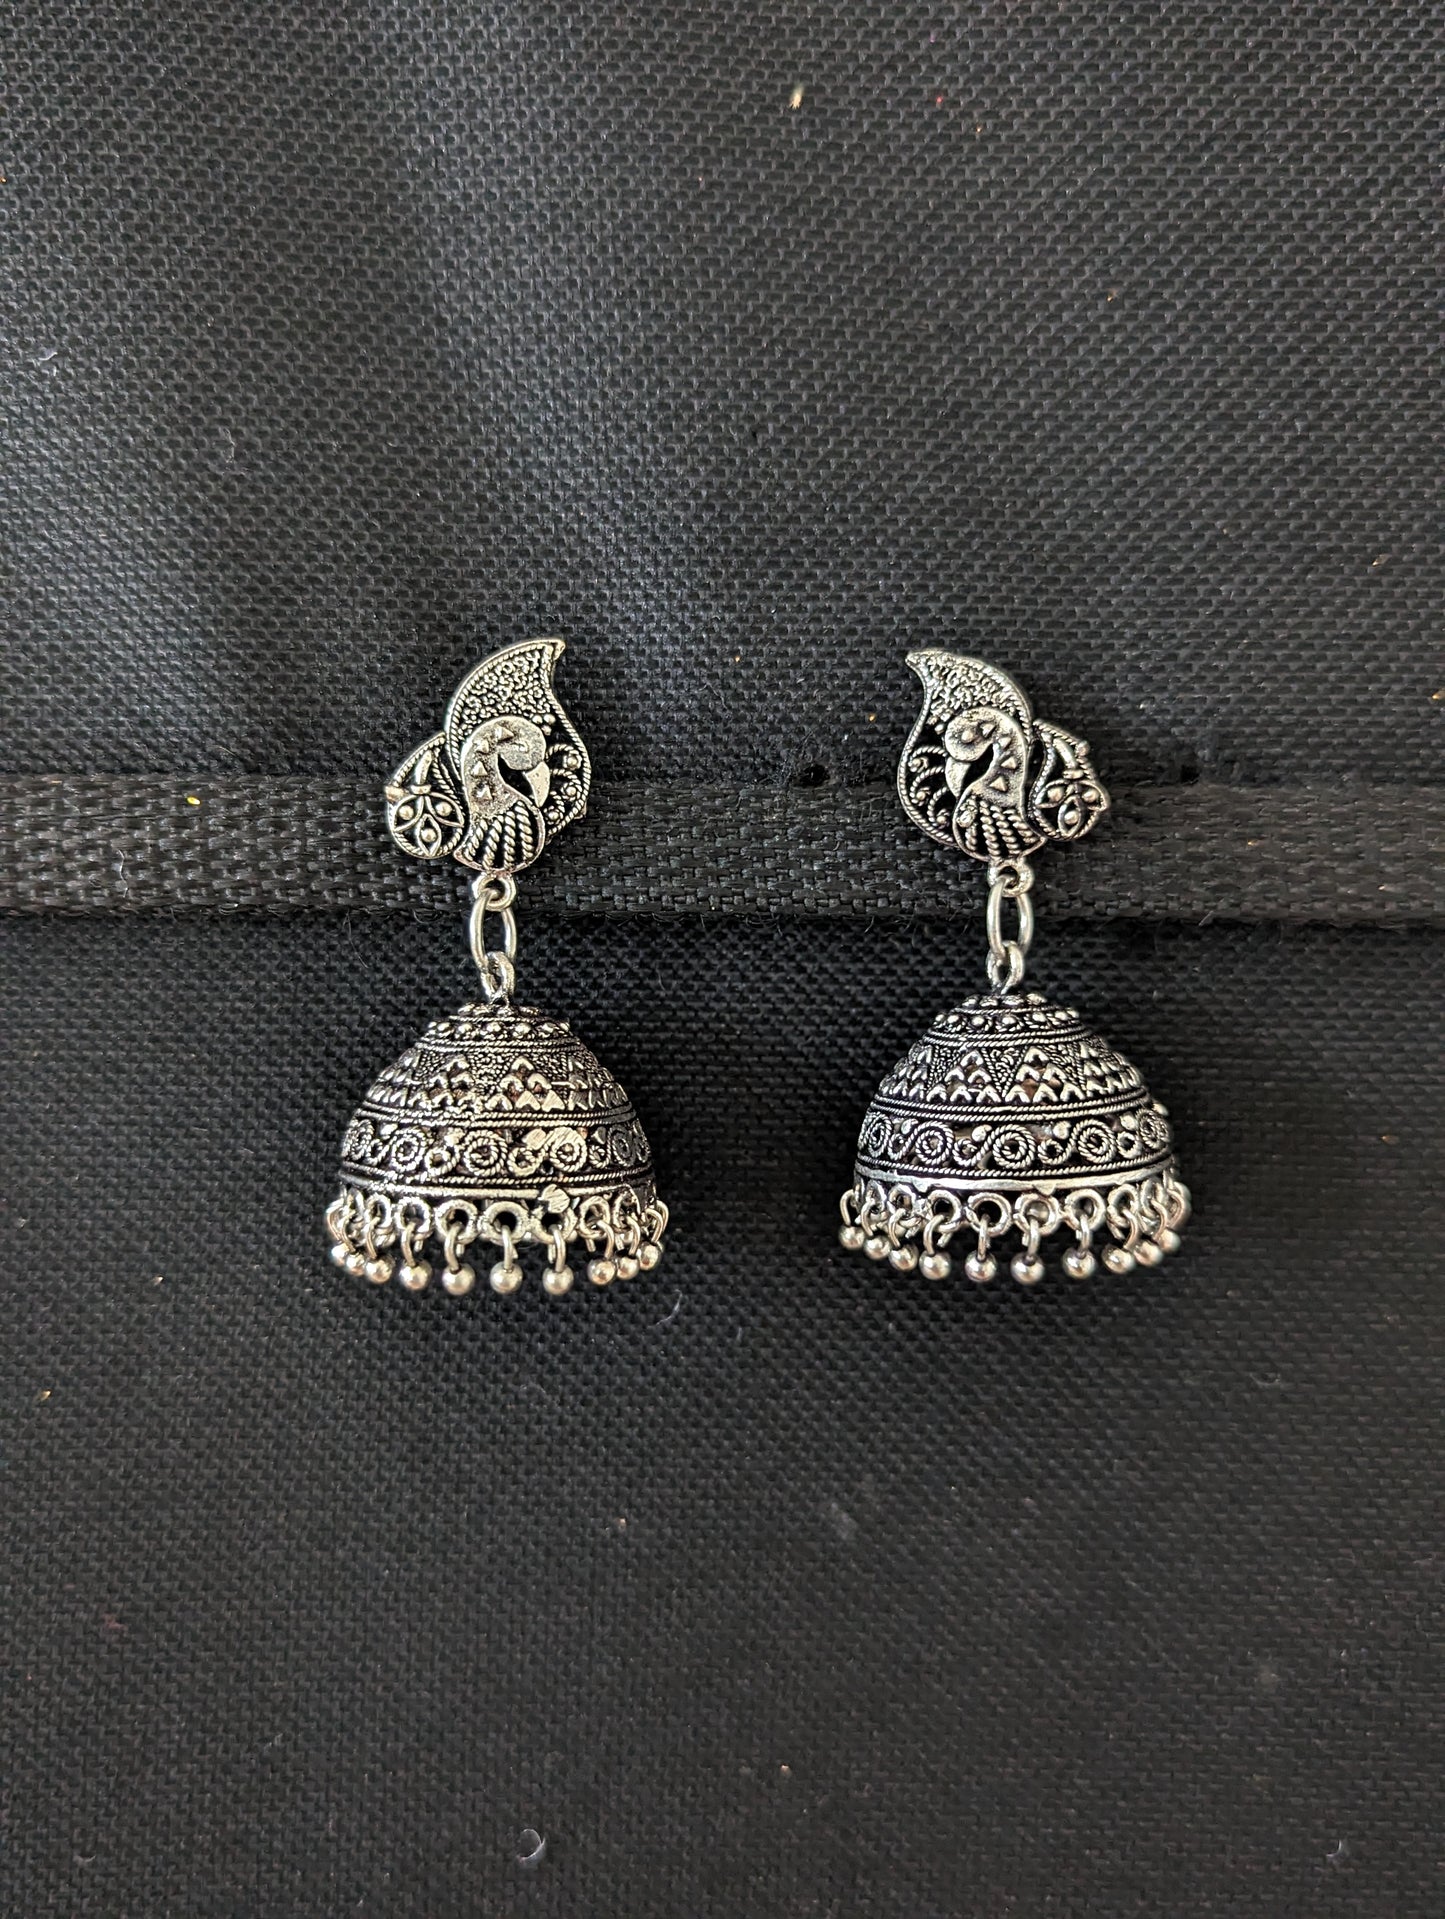 Oxidized silver Jhumka Earrings - Medium size